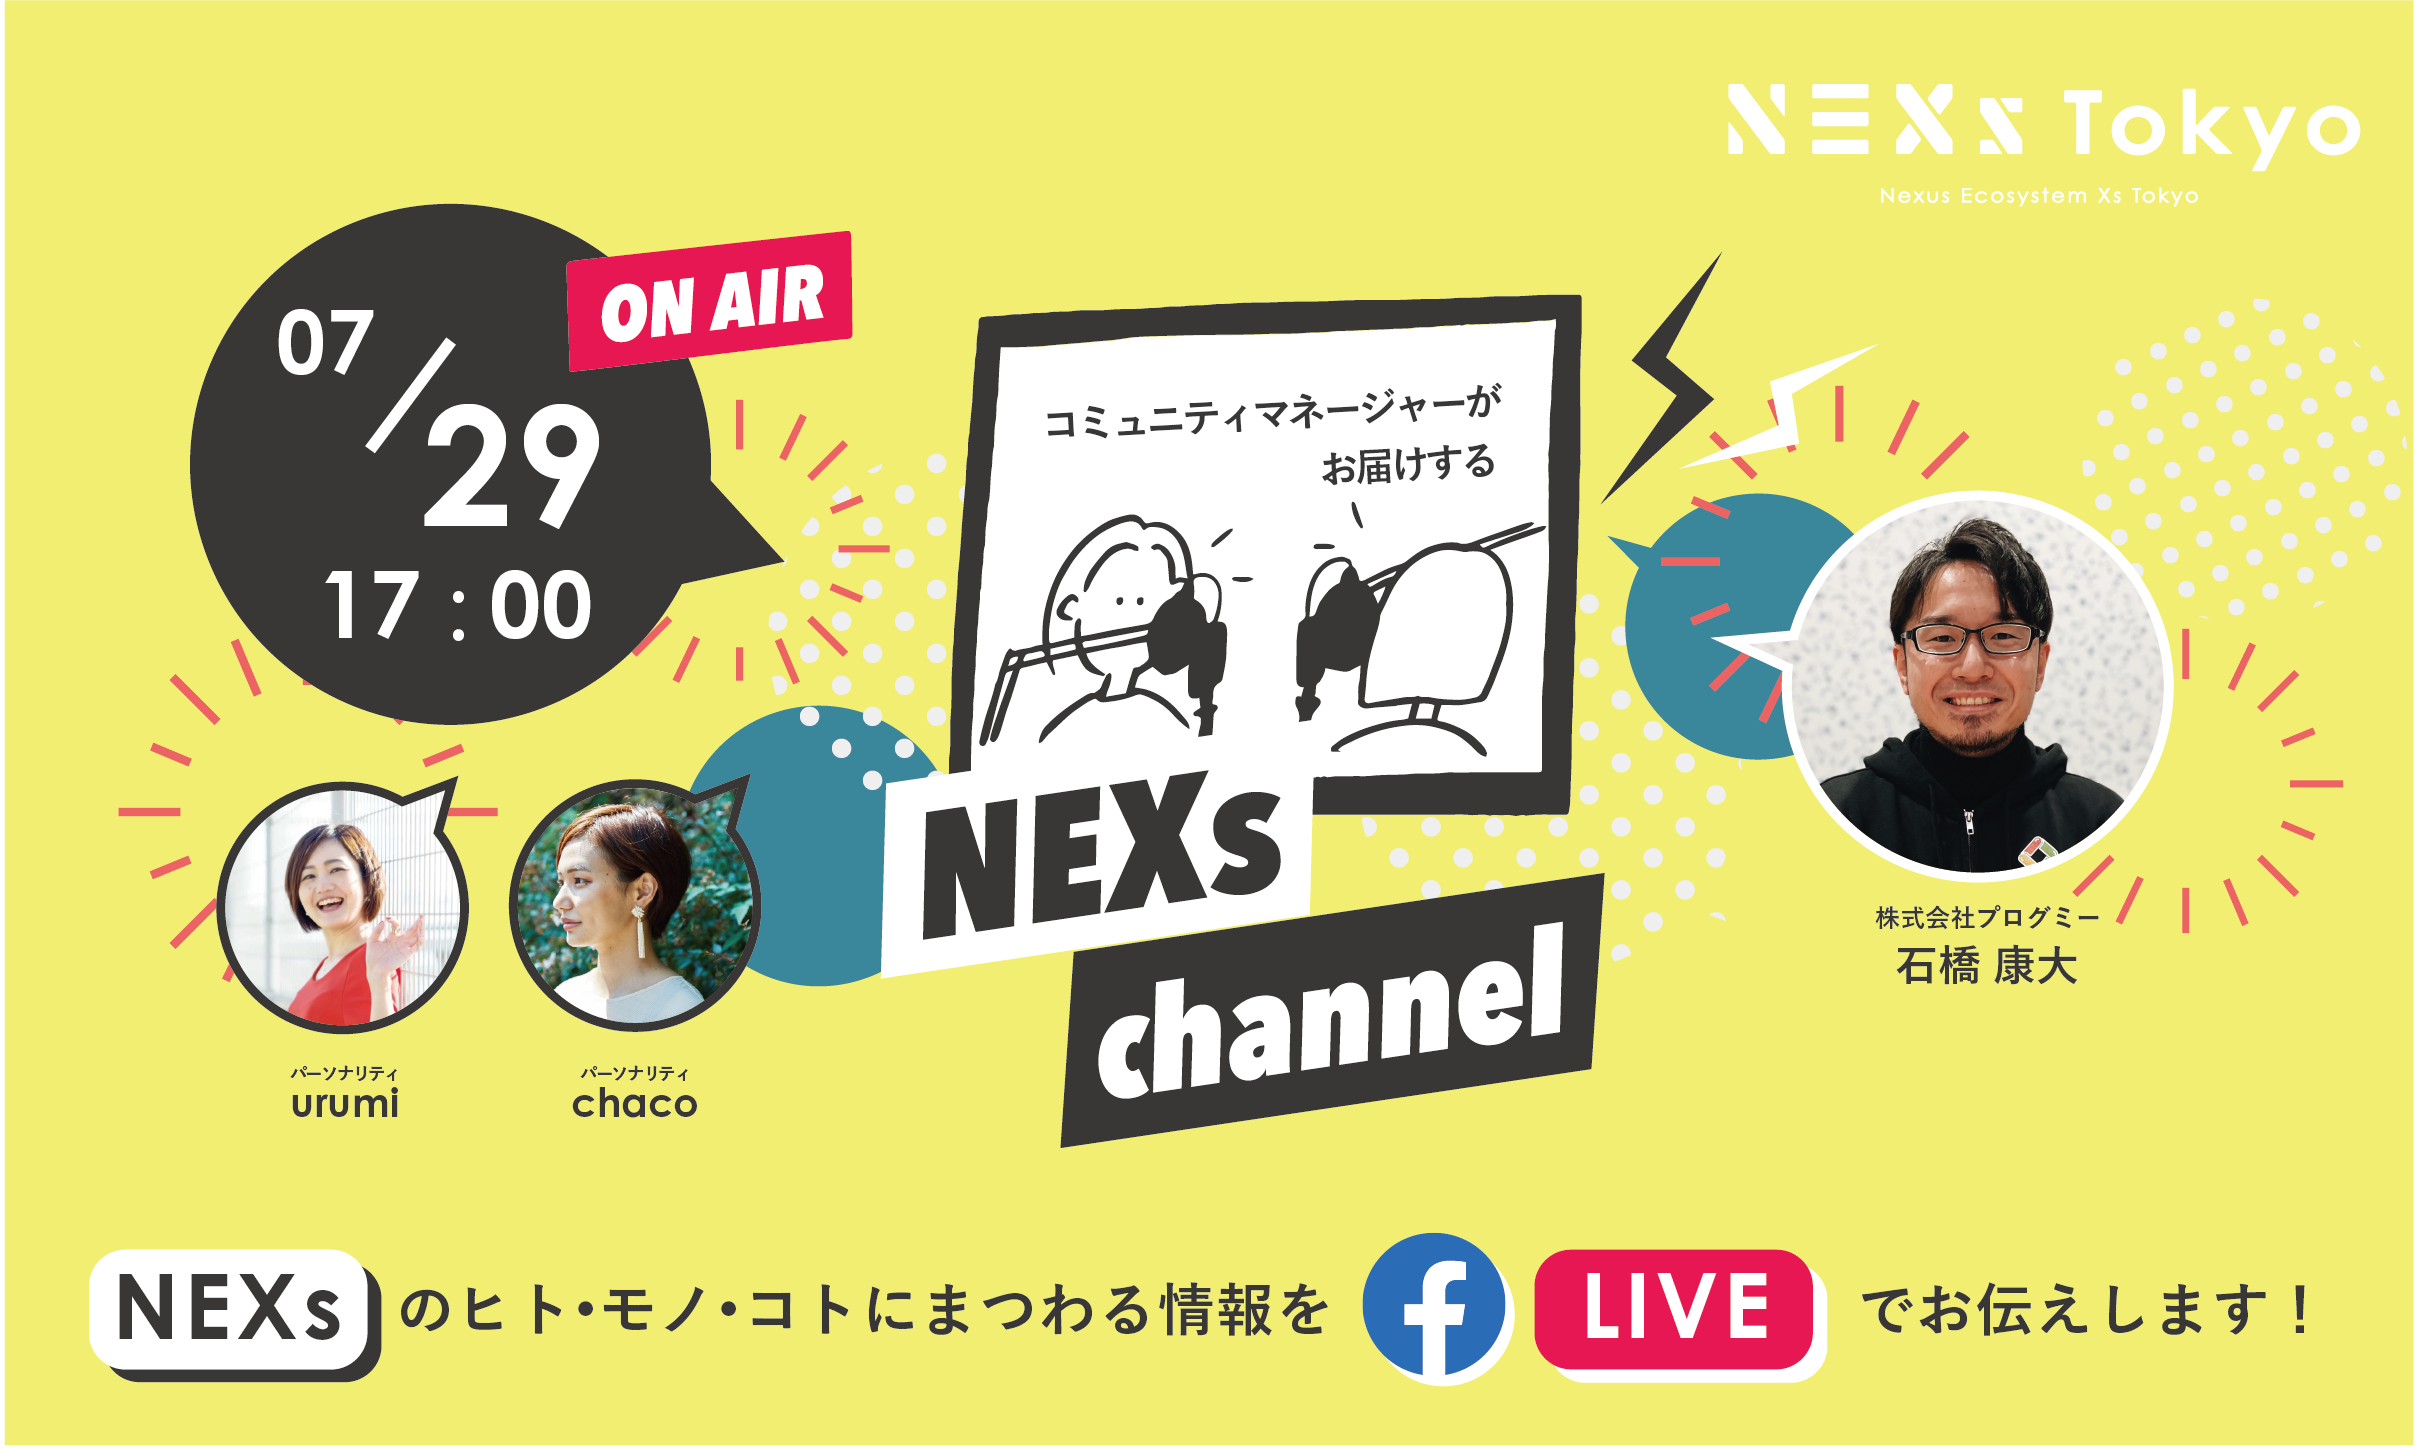 NEXs channel #19 -NEXs Tokyoのヒト・モノ・コトを特設ラジオブースから生放送でお届け！-